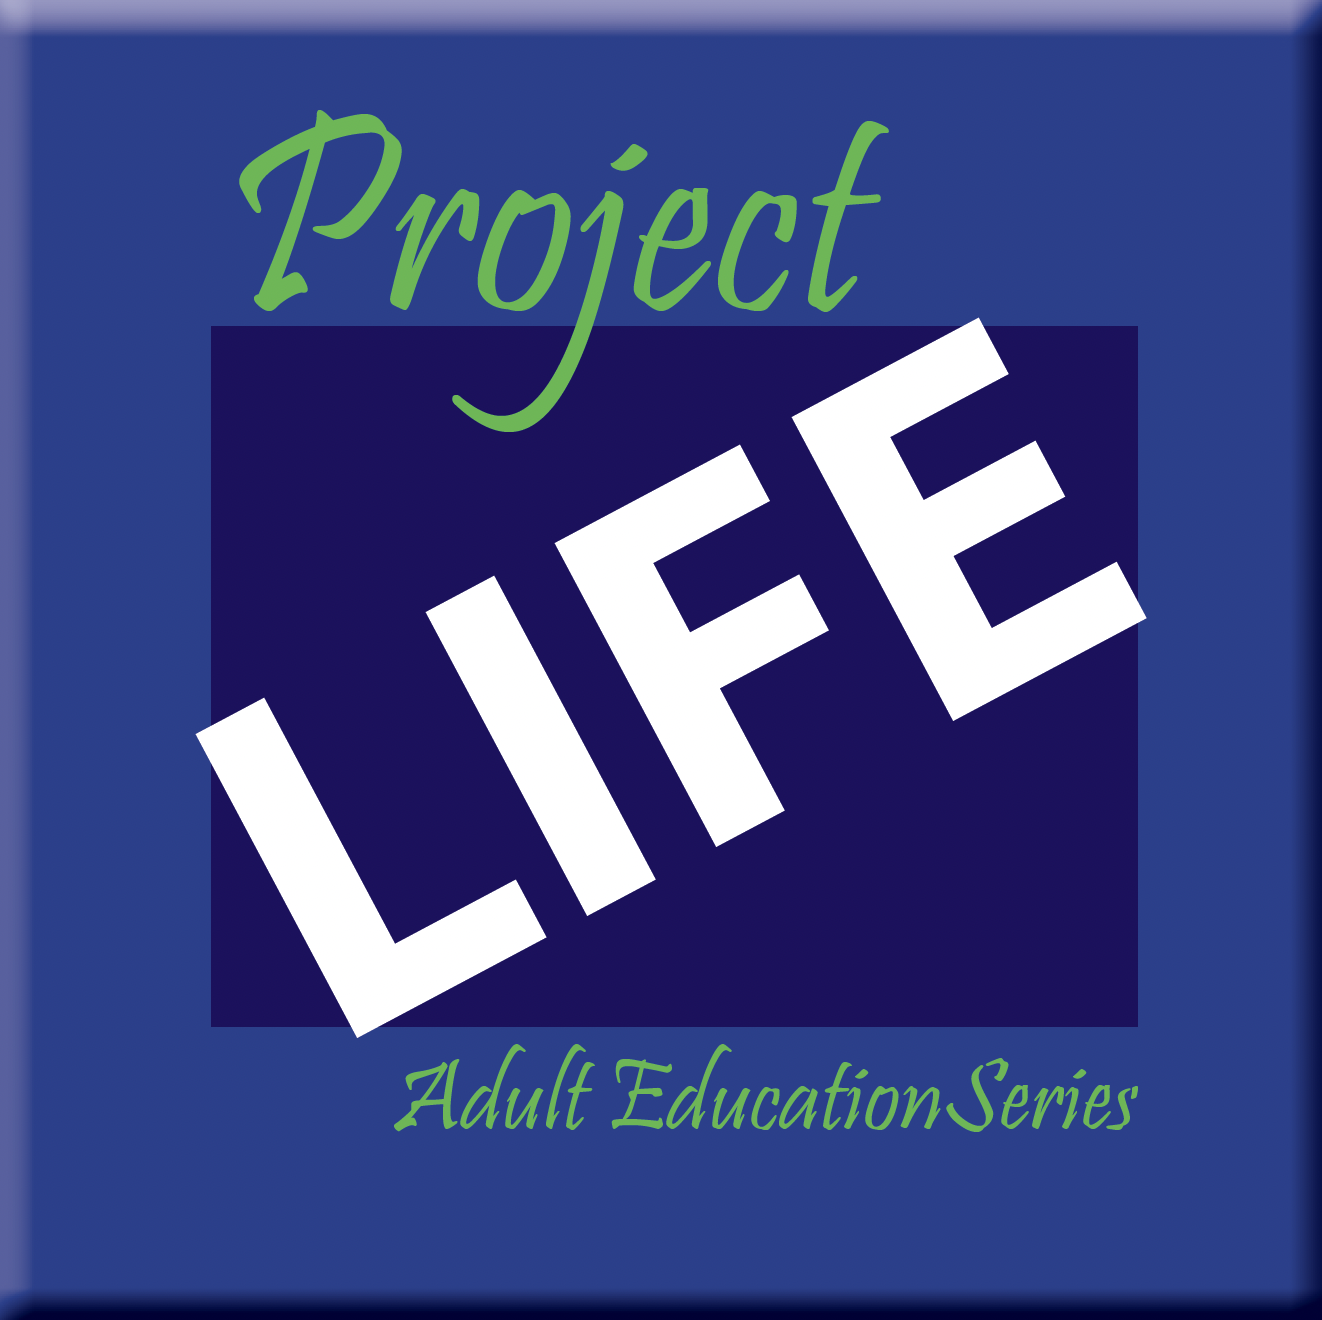 Project Life program logo